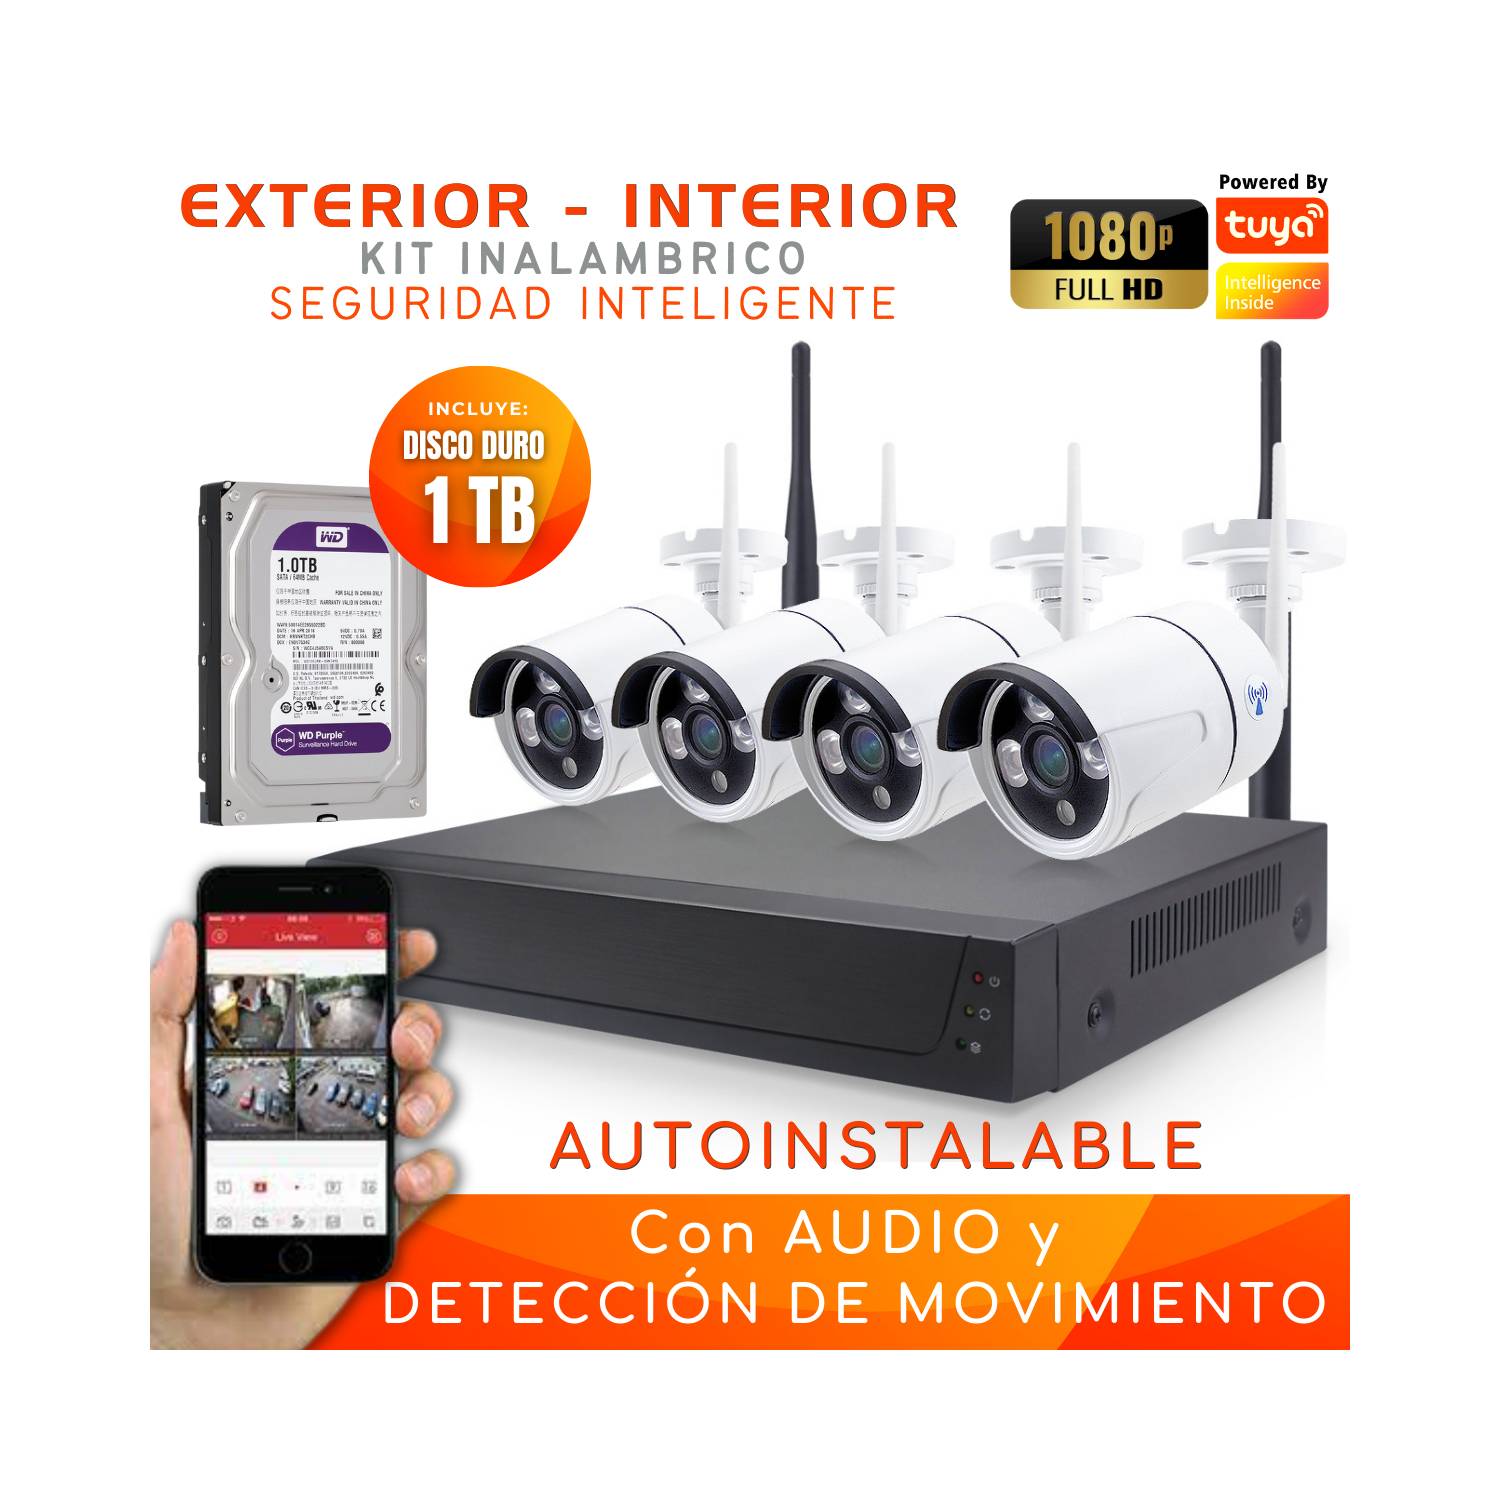 Kit X3 - Cámara de seguridad Exterior/Interior Inalámbrica Wifi HD con